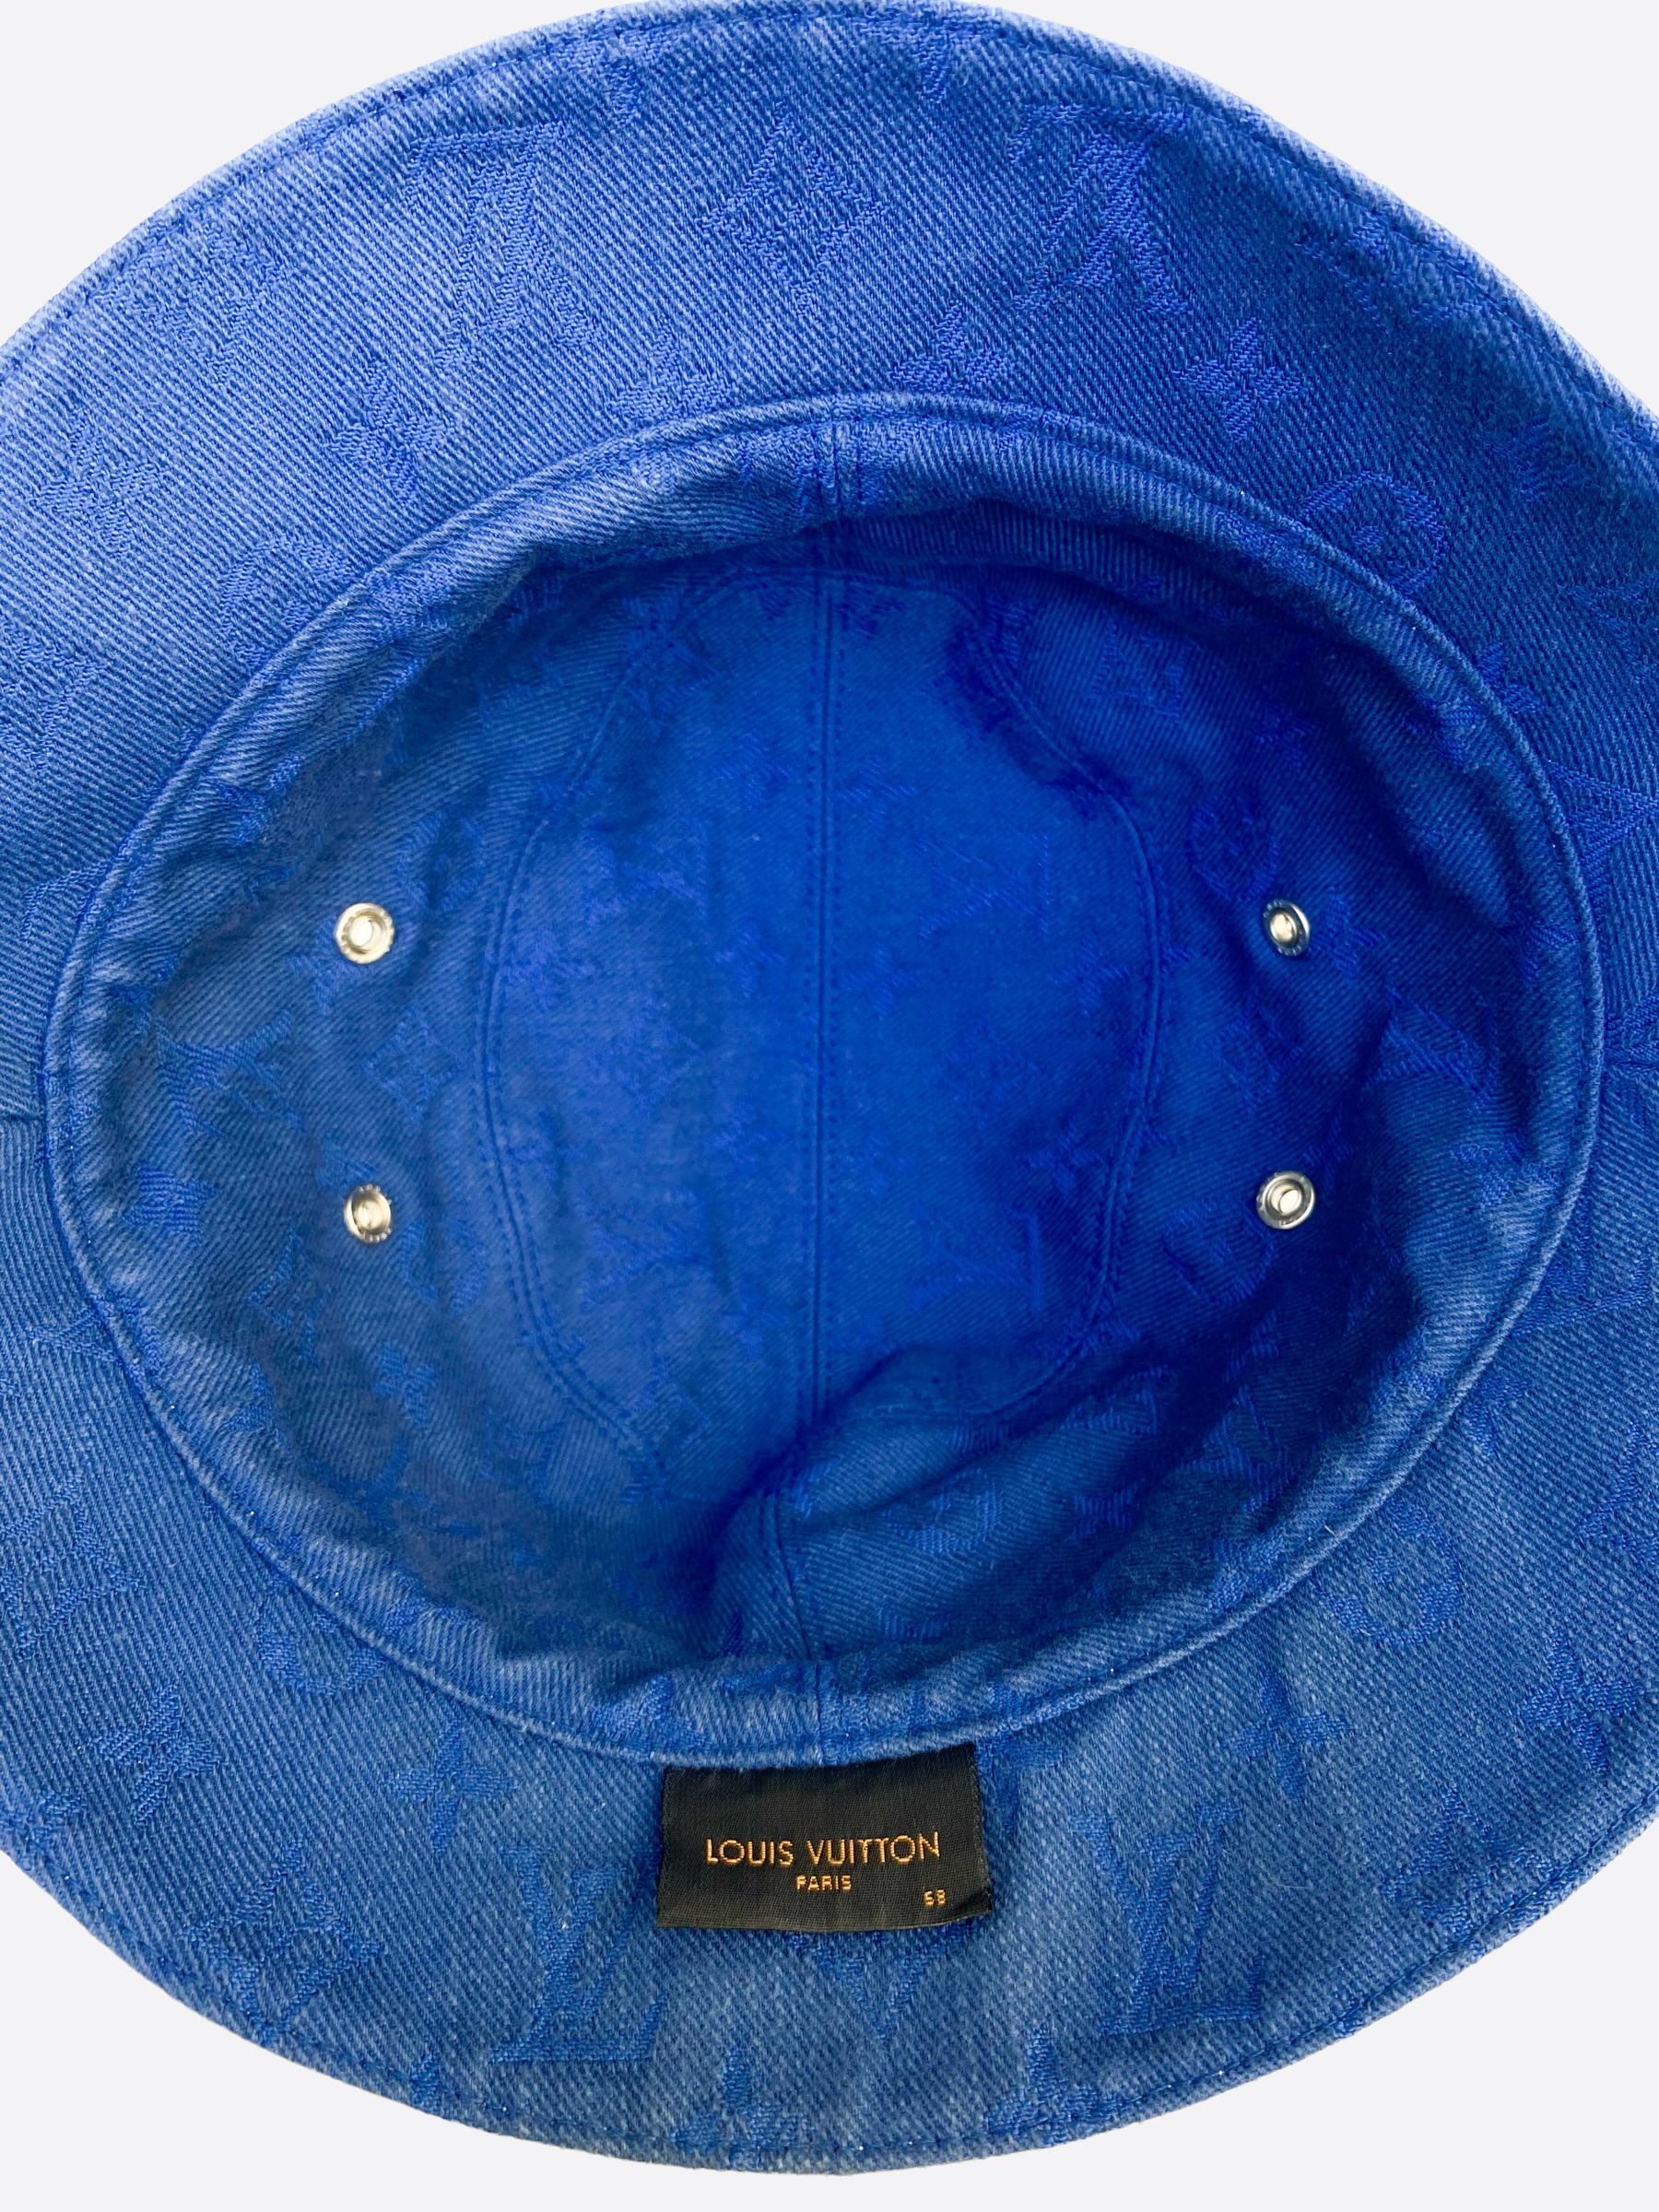 lv bucket hat price